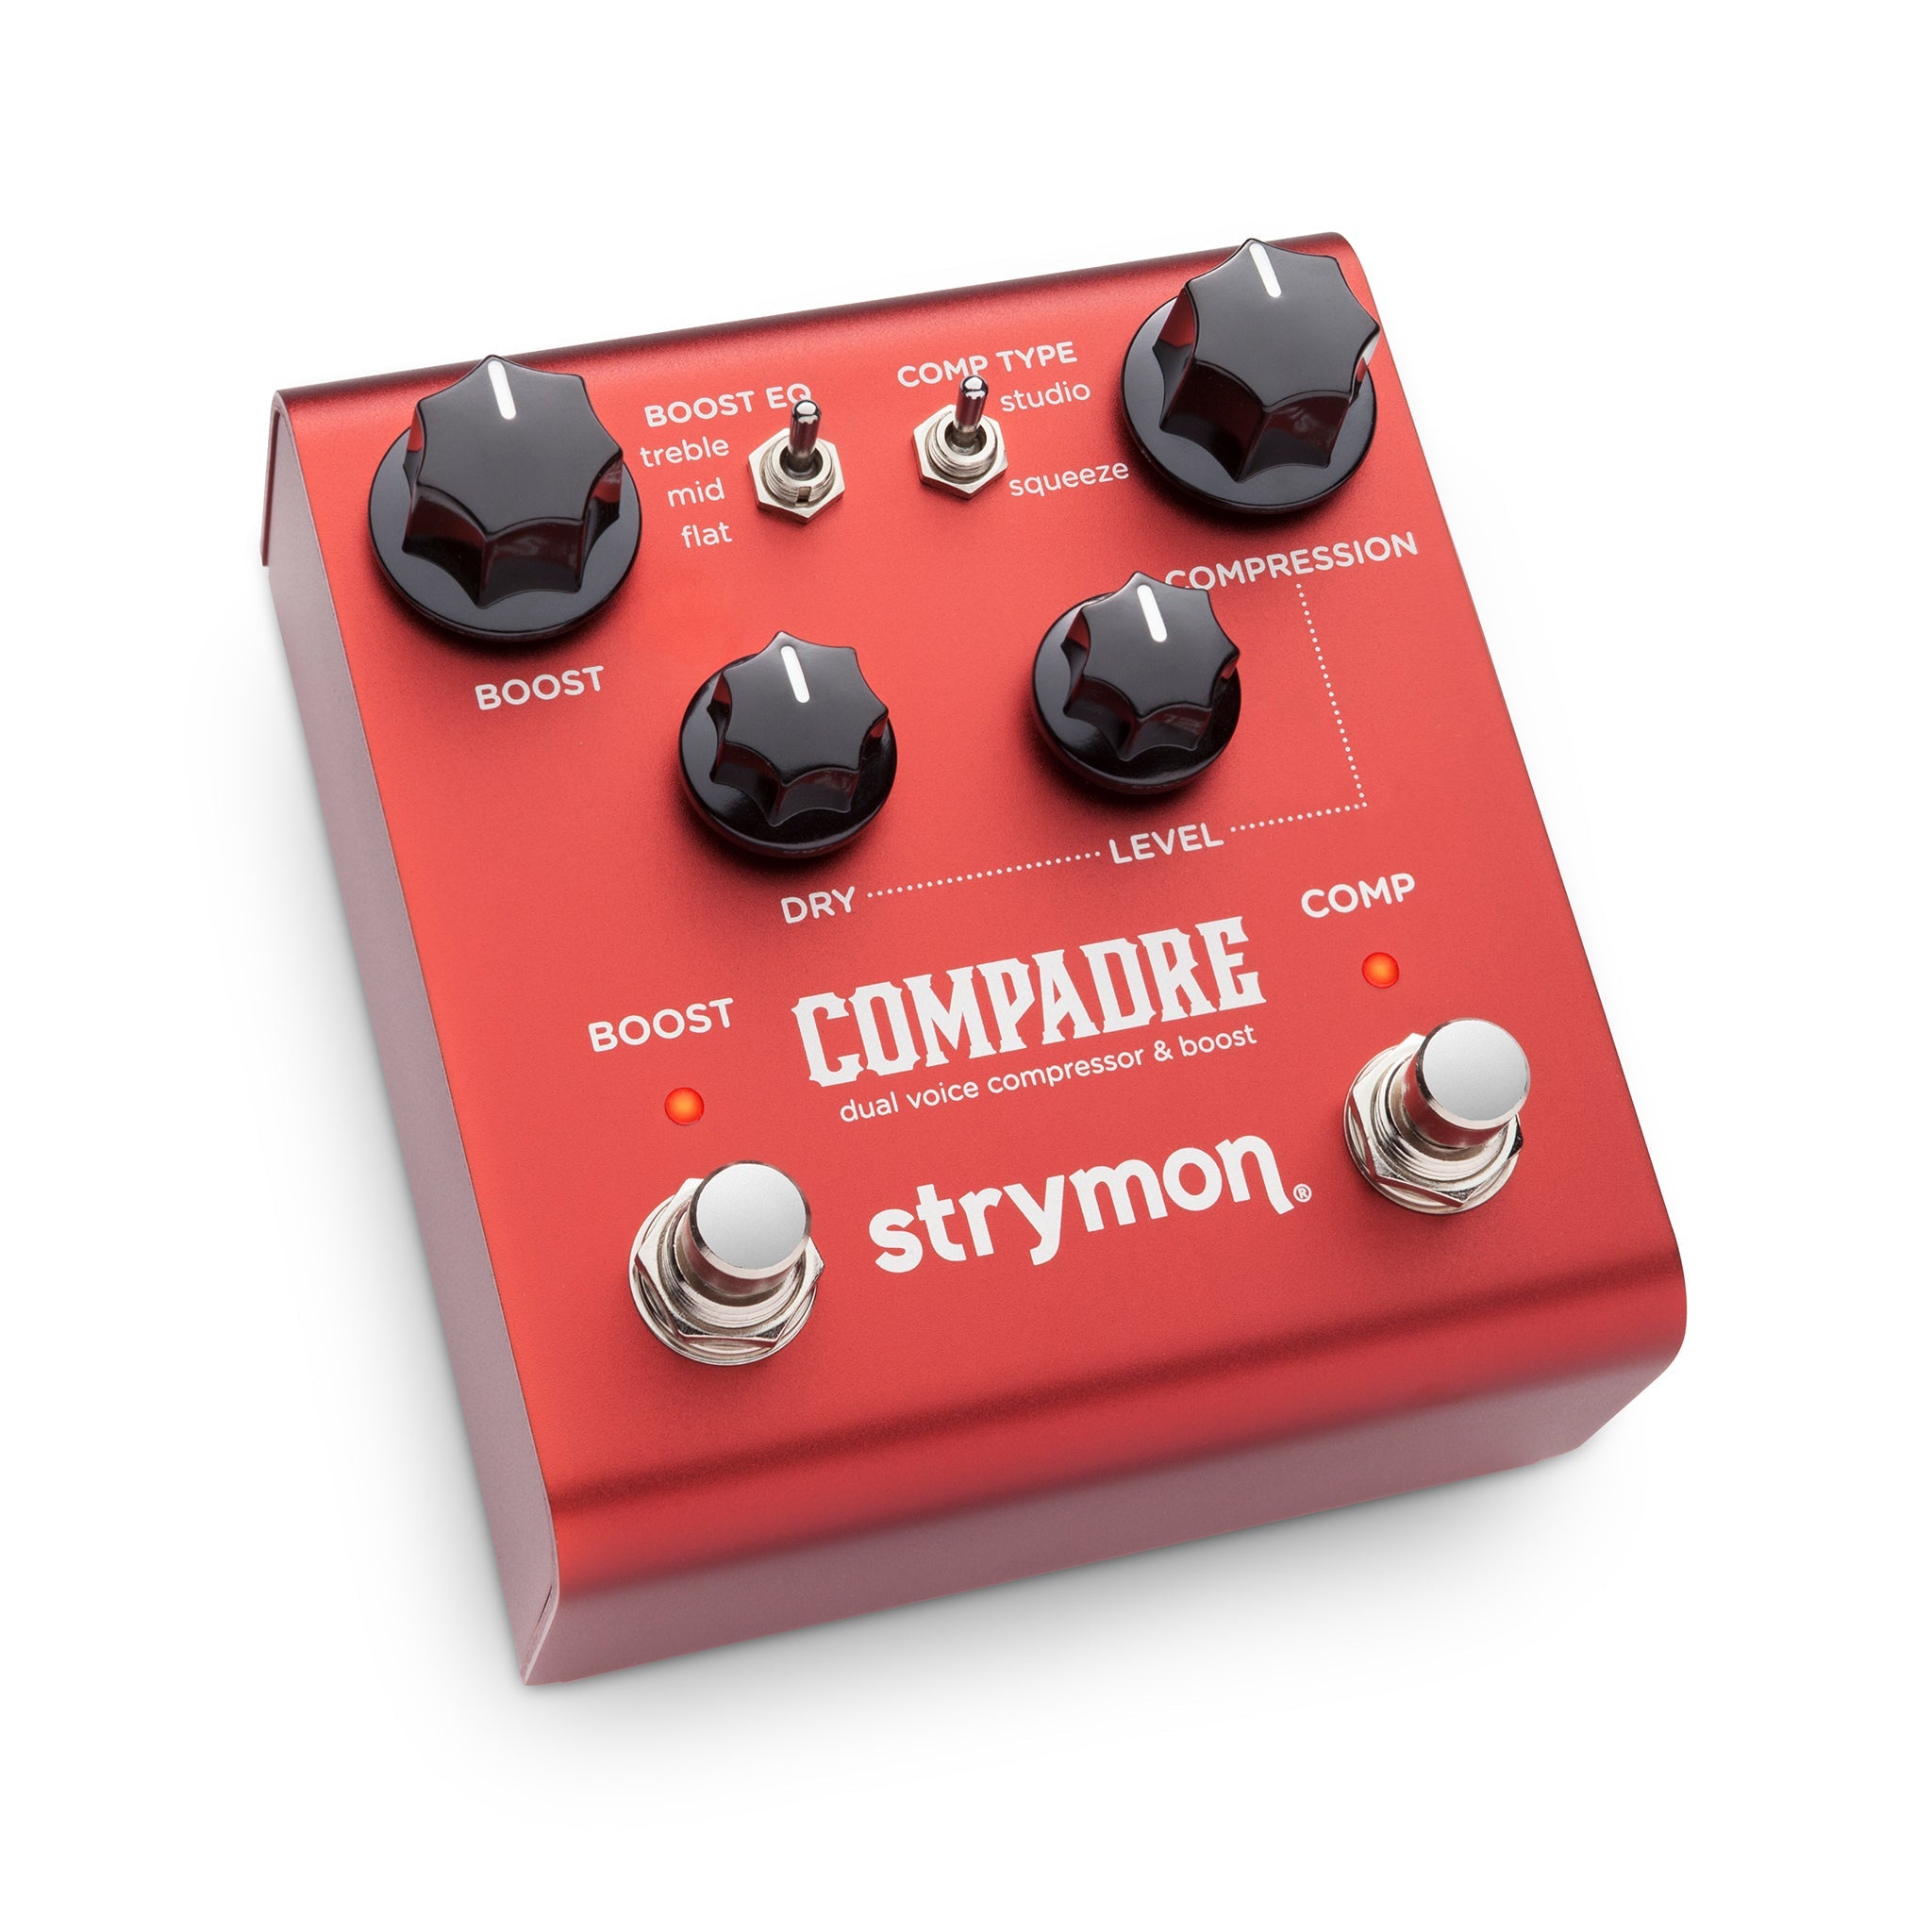 Strymon Compadre Dual Voice Compressor & Boost Guitar Effects Pedal Zoso Music